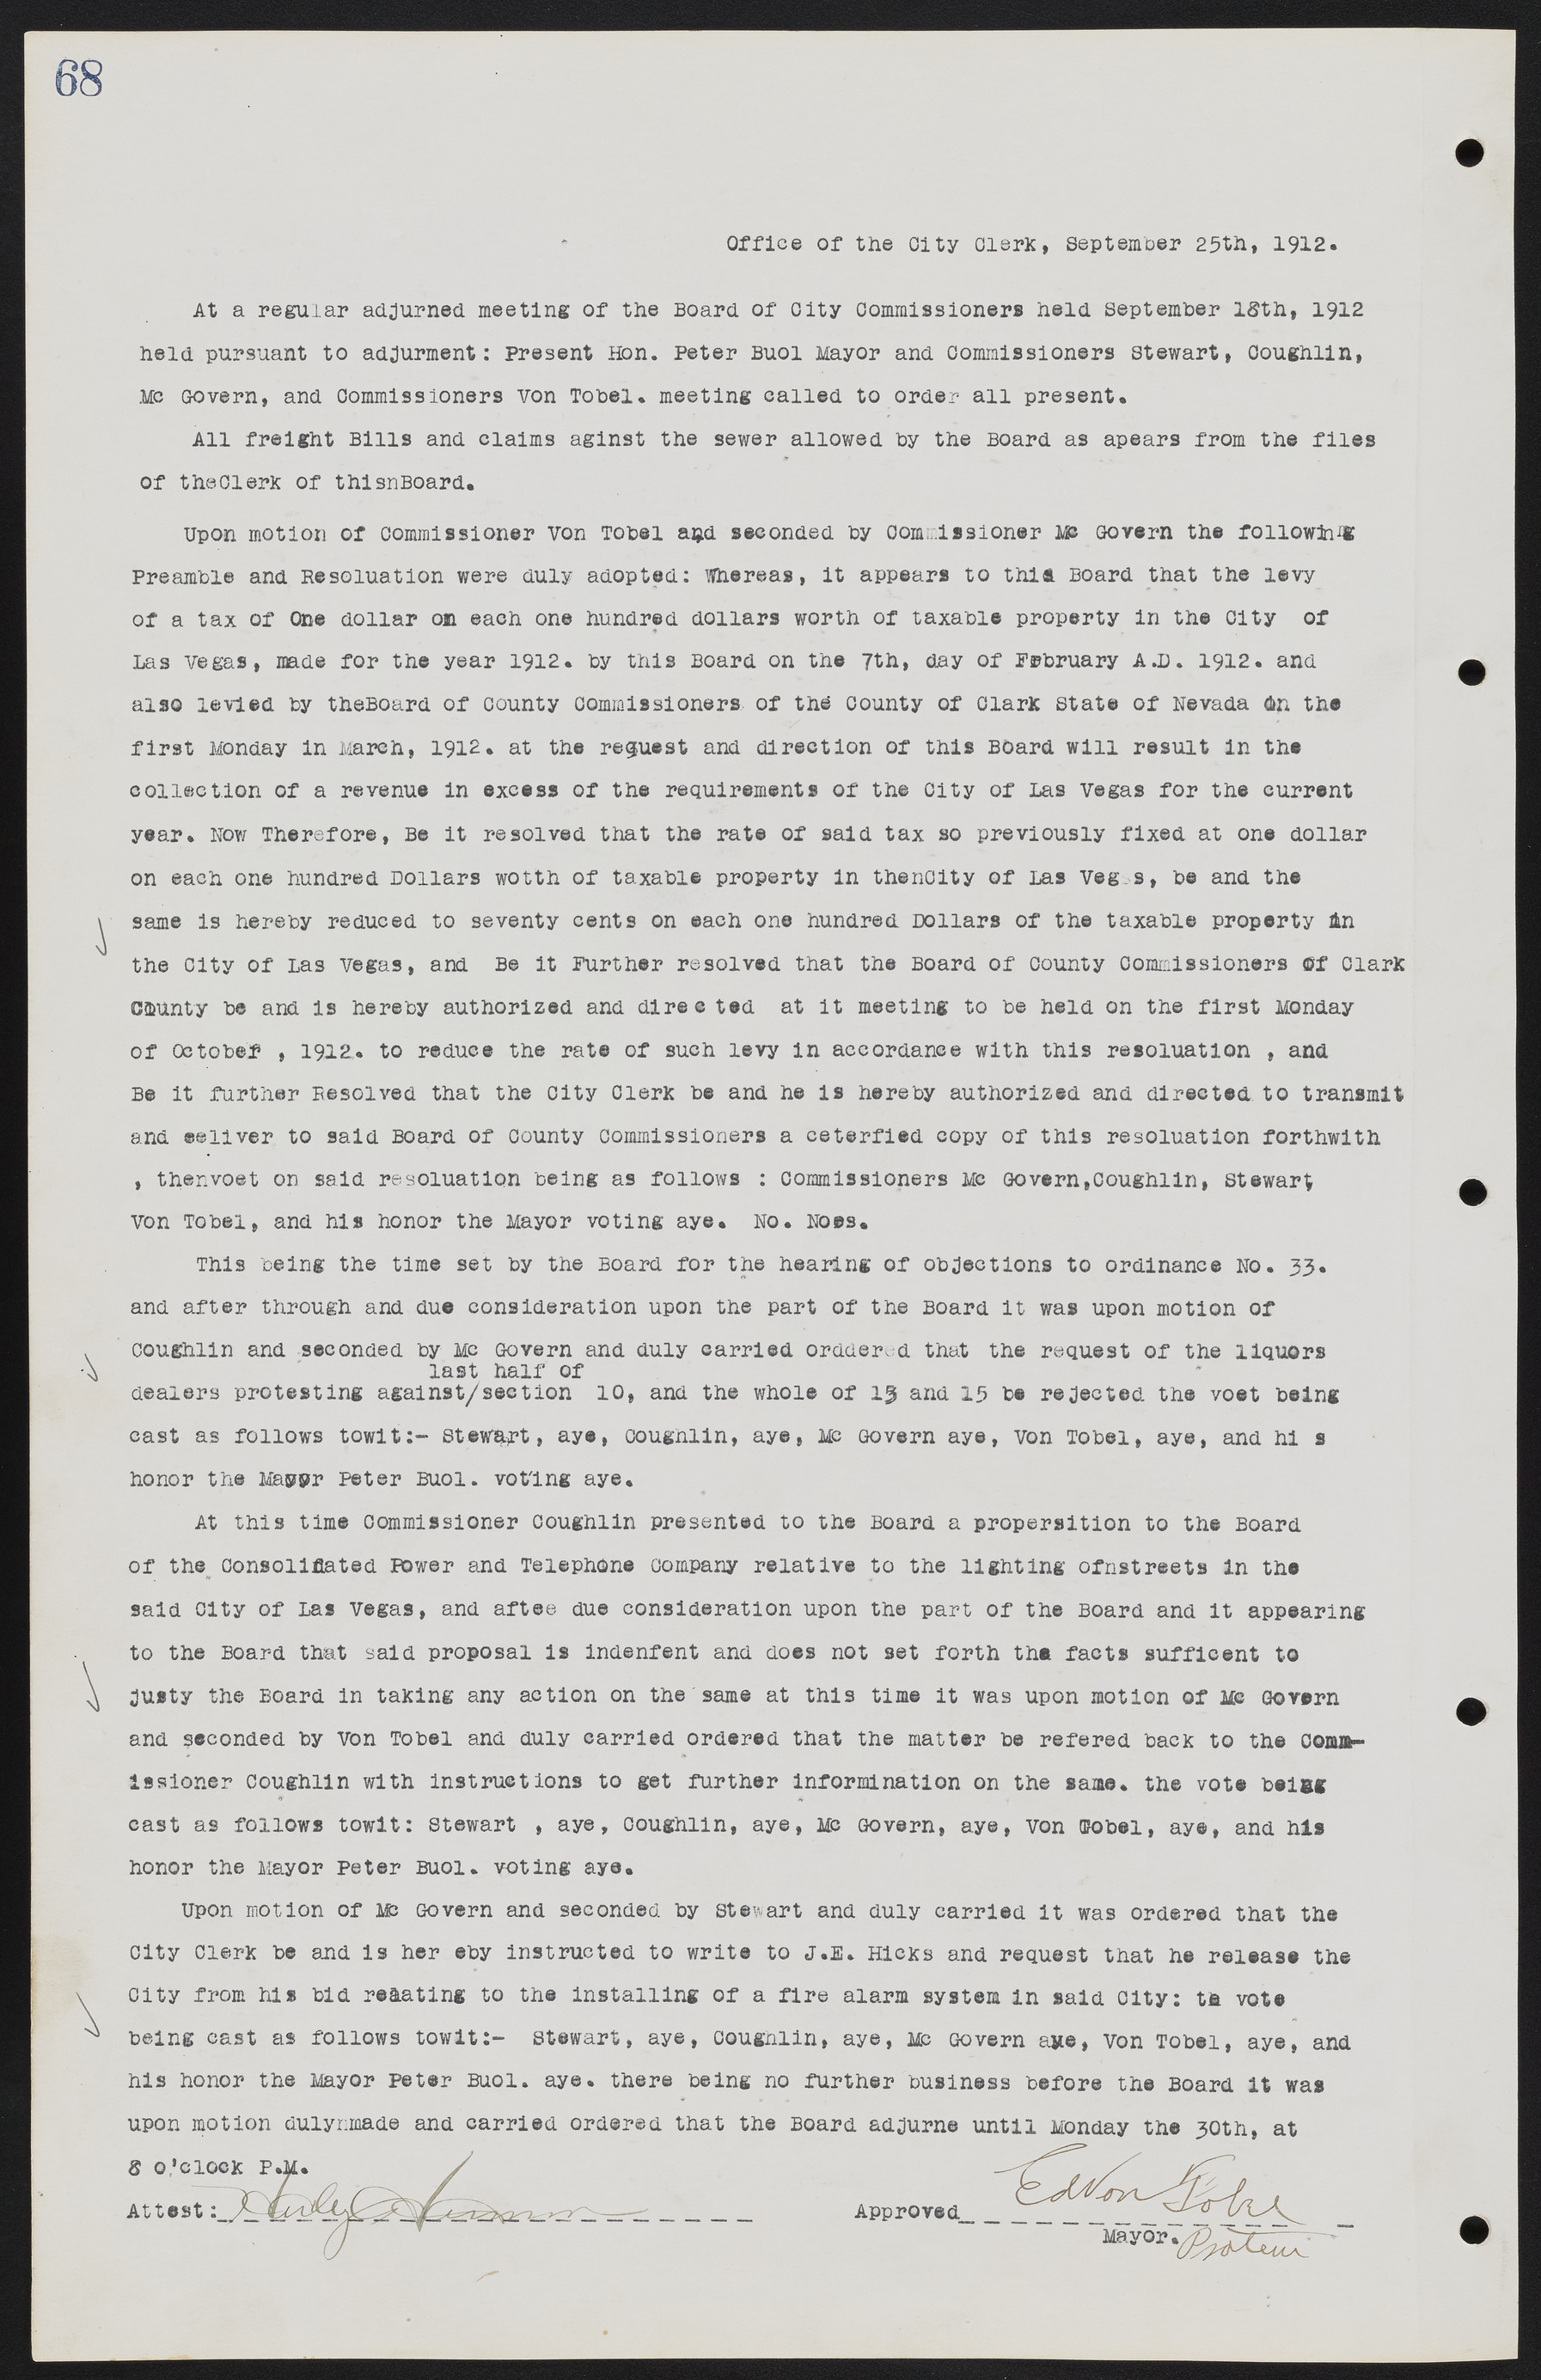 Las Vegas City Commission Minutes, June 22, 1911 to February 7, 1922, lvc000001-82